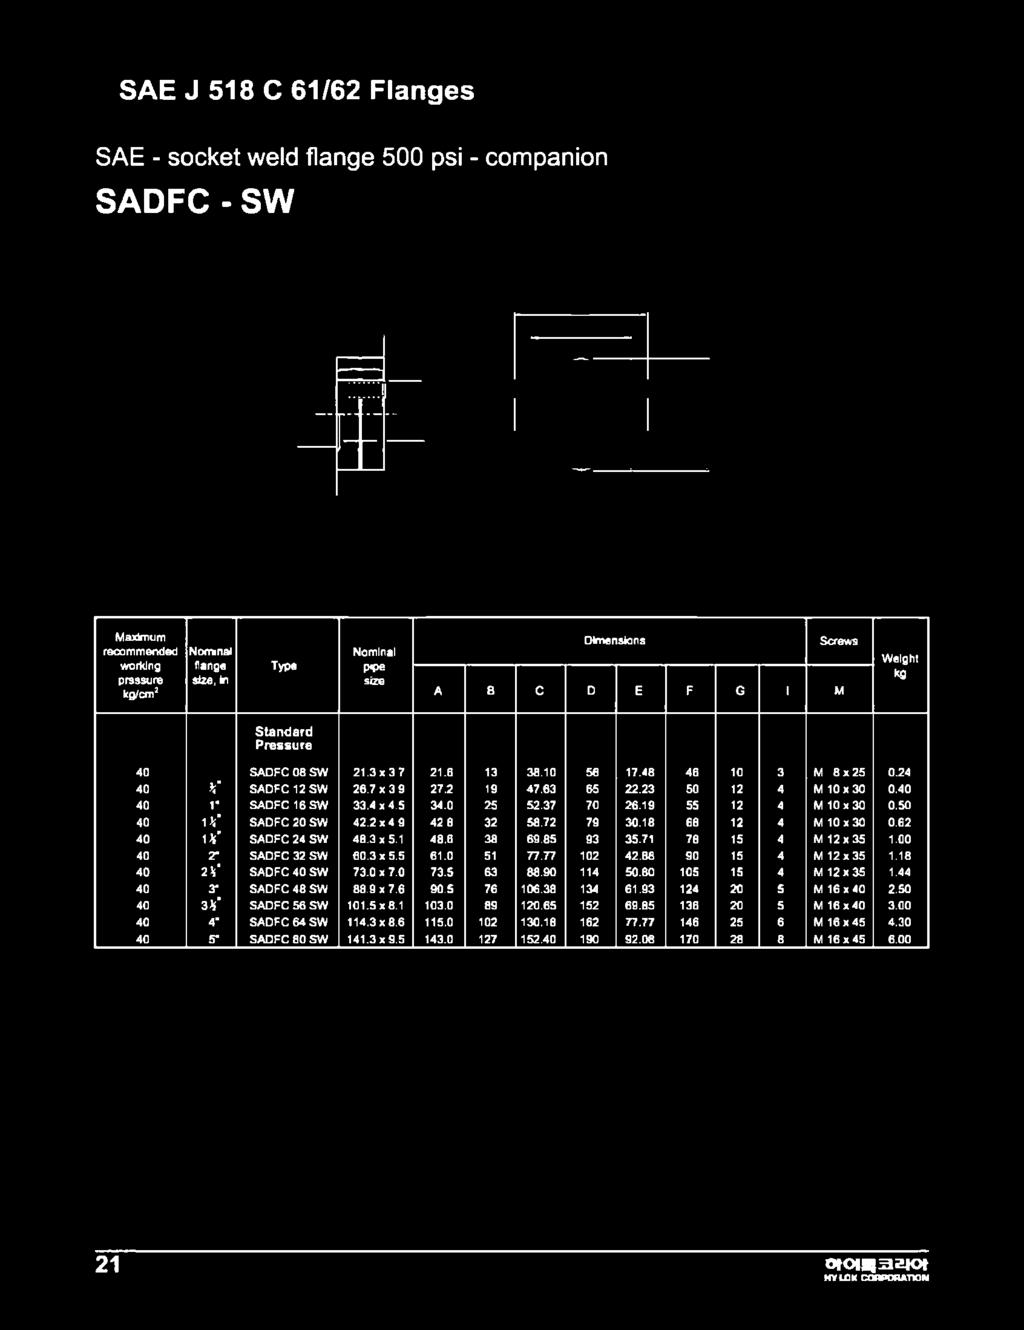 SAE - socket weld flange 500 psi - companion SADFC - SW /cm* (lango pipe size A В С D E F G I M P ressu re 40 SADFC 08 SW 21.3x3 7 21.6 13 38.10 56 17.48 46 10 3 M 8x25 0.24 40 ** SADFC 12 SW 26.